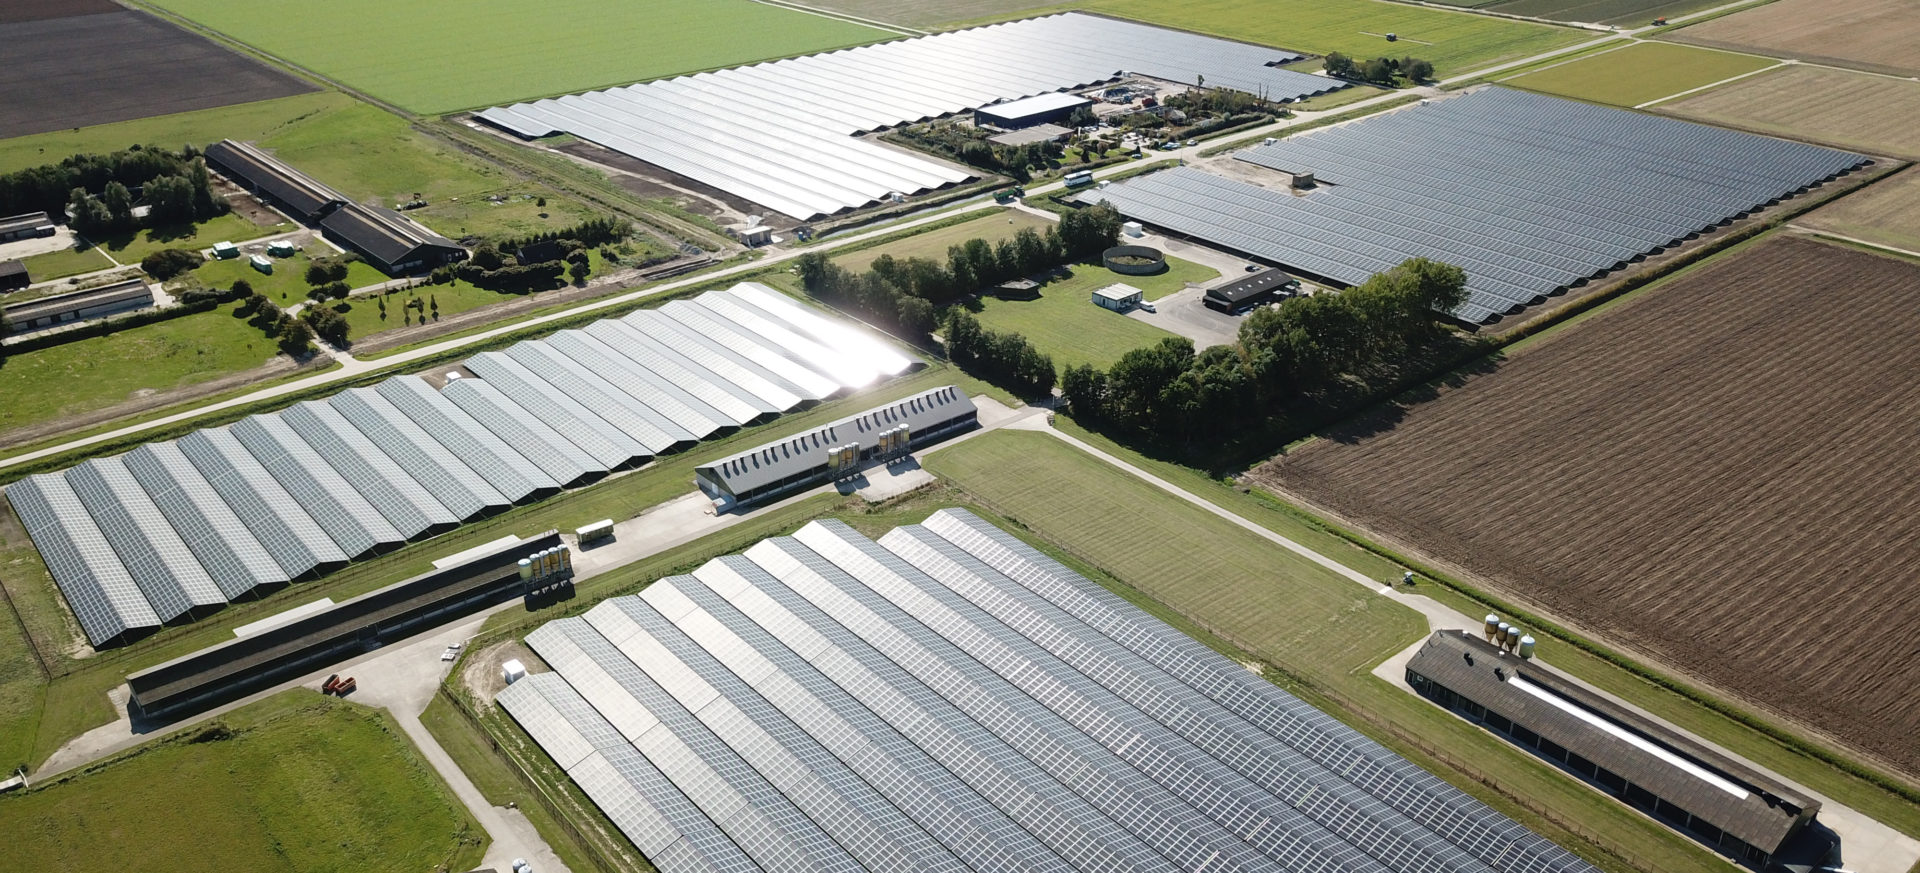 Luftaufnahme des Solarparks in Lelystad, Niederlanden